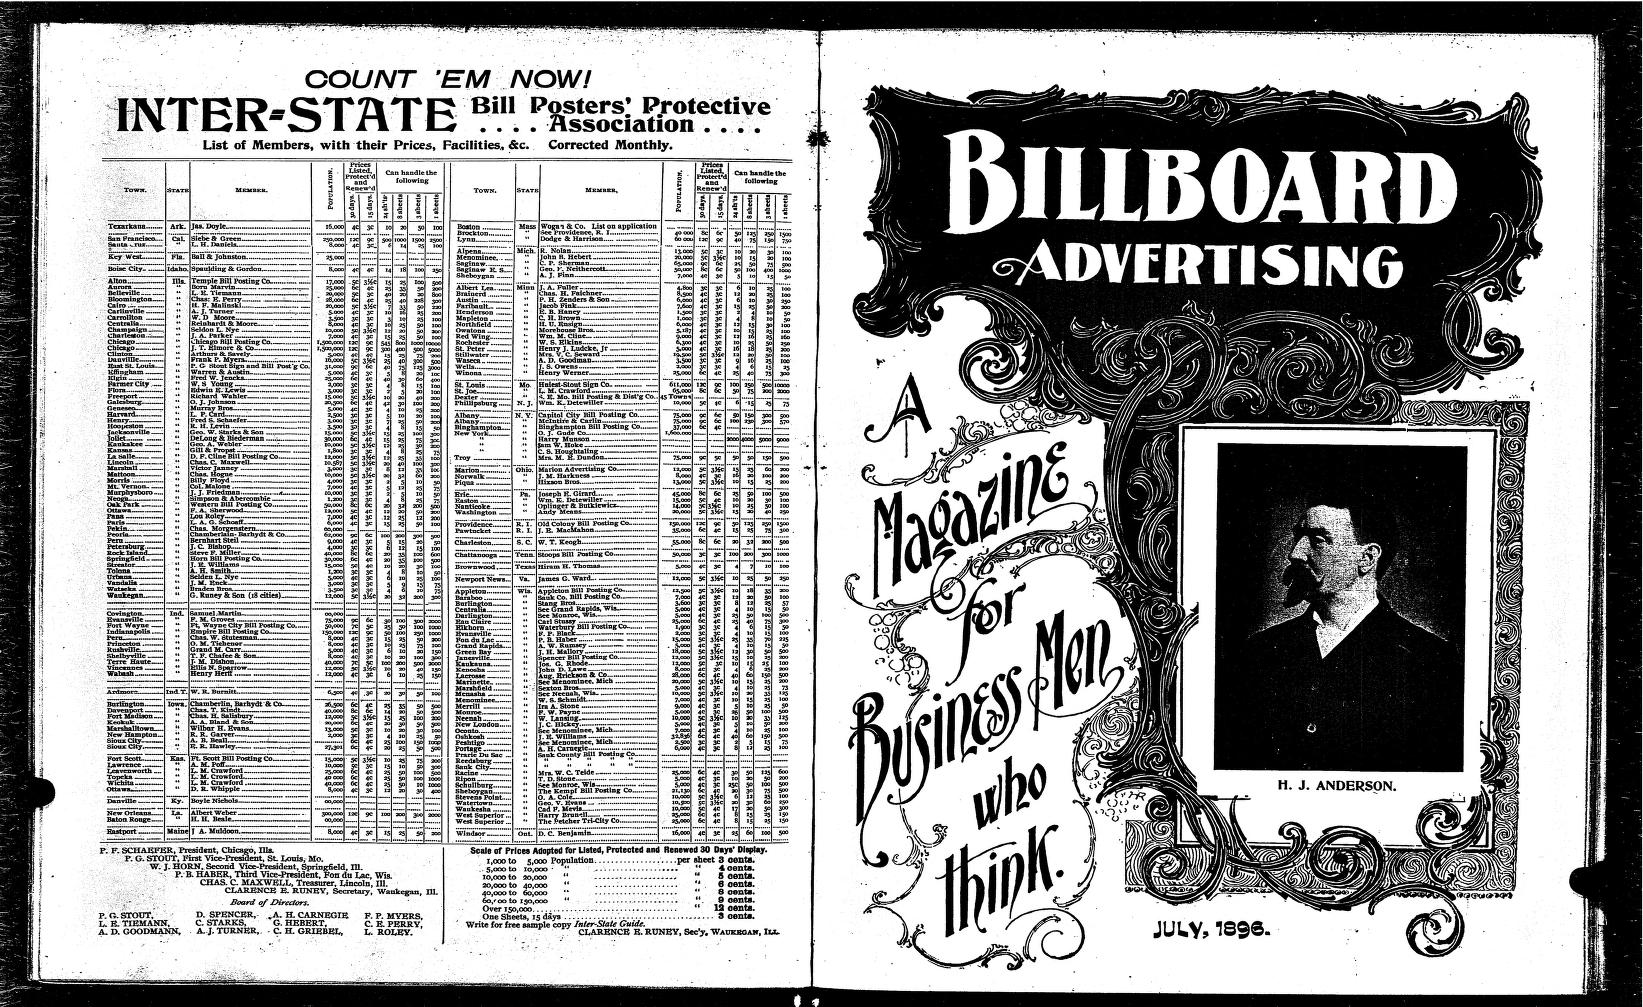 Billboard advertising (July-Dec 1896)